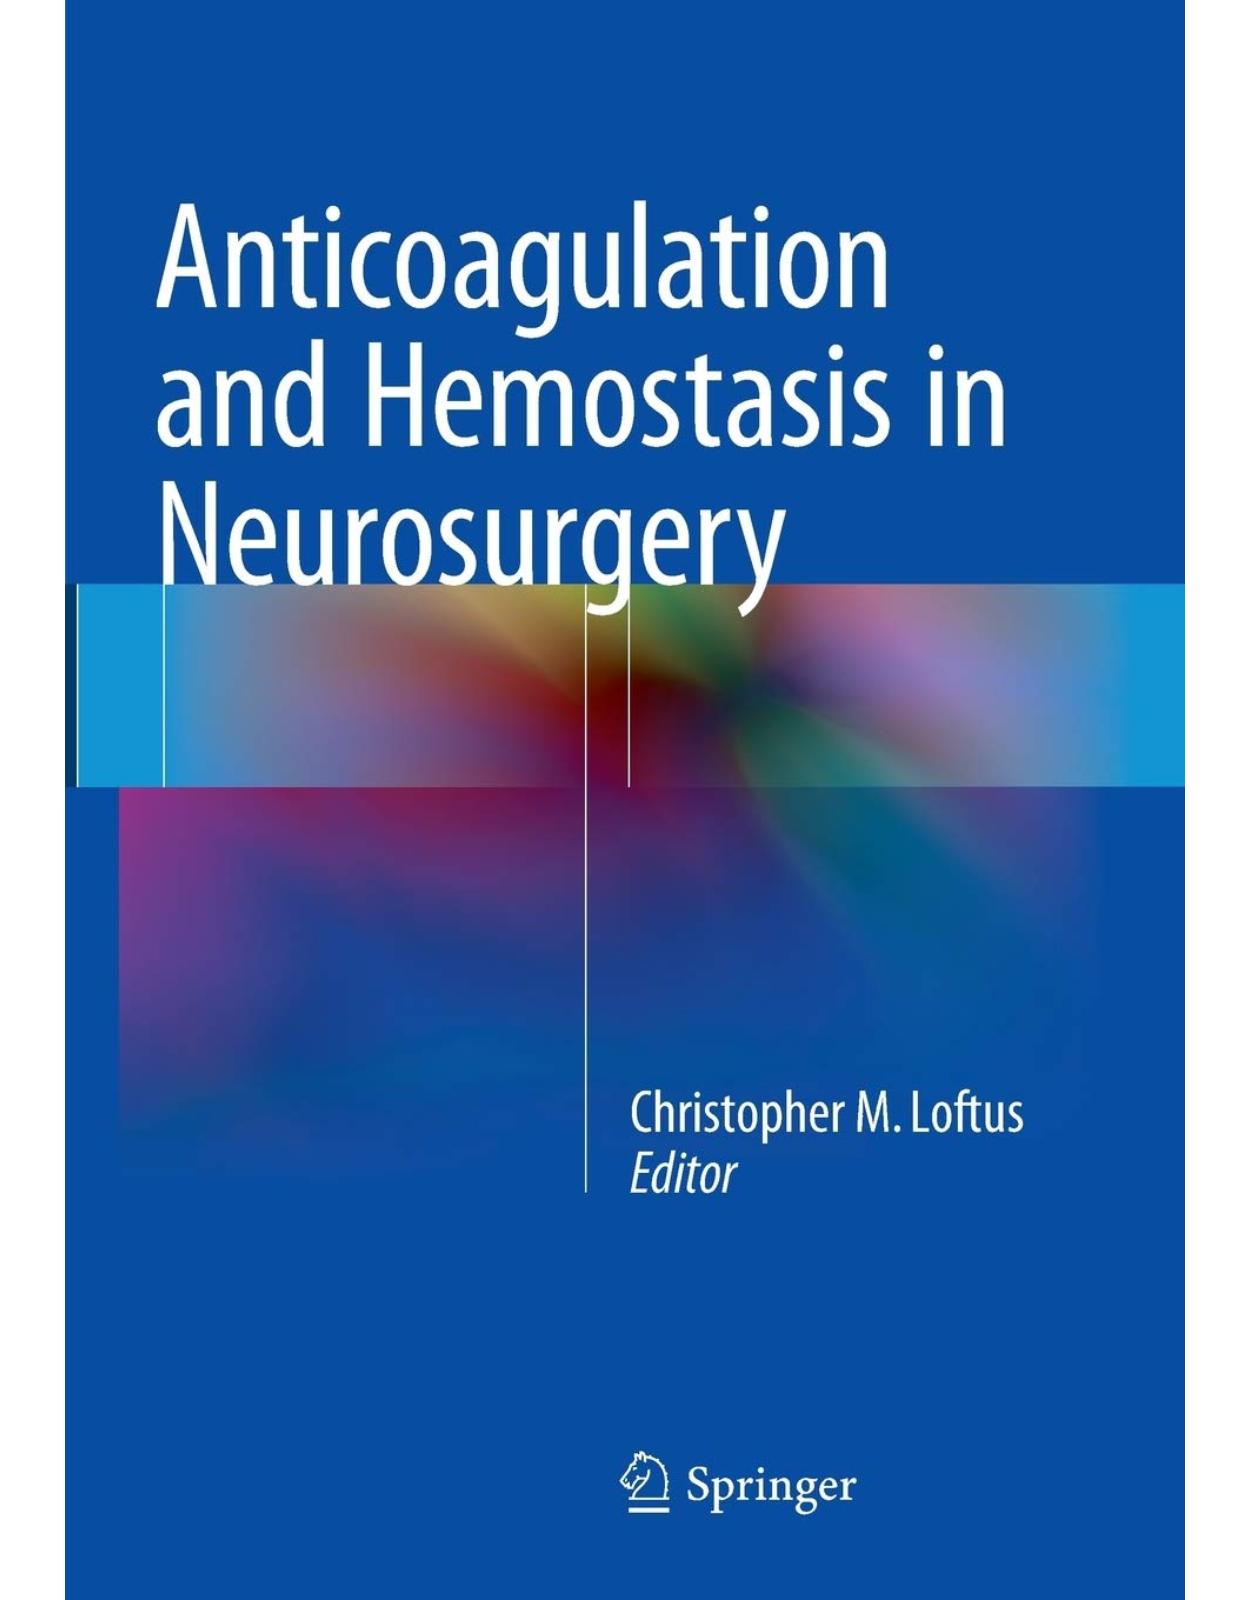 Anticoagulation and Hemostasis in Neurosurgery